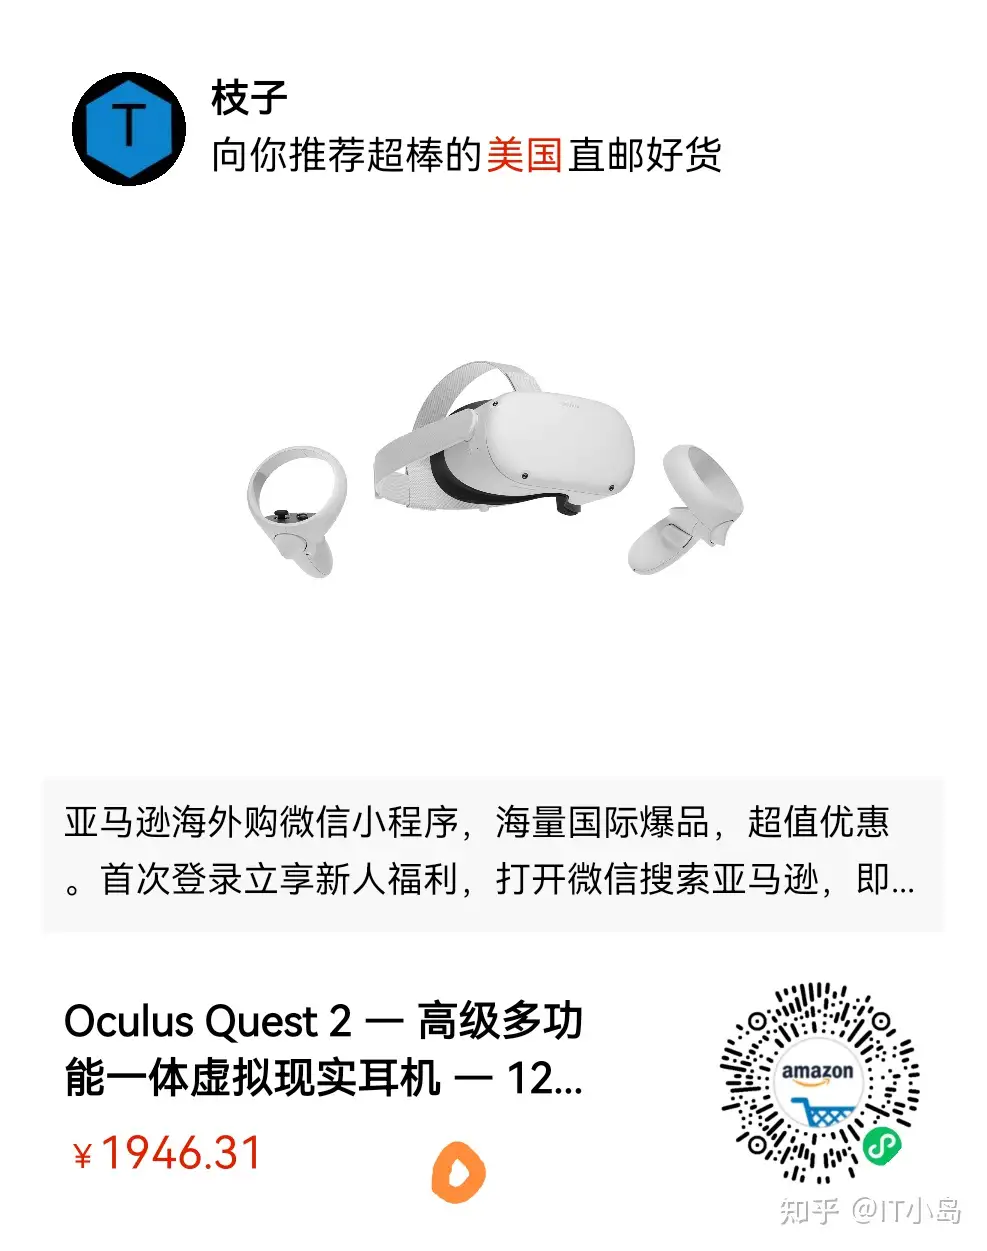 oculus quest2 都有那些省钱的购买渠道？ - 知乎